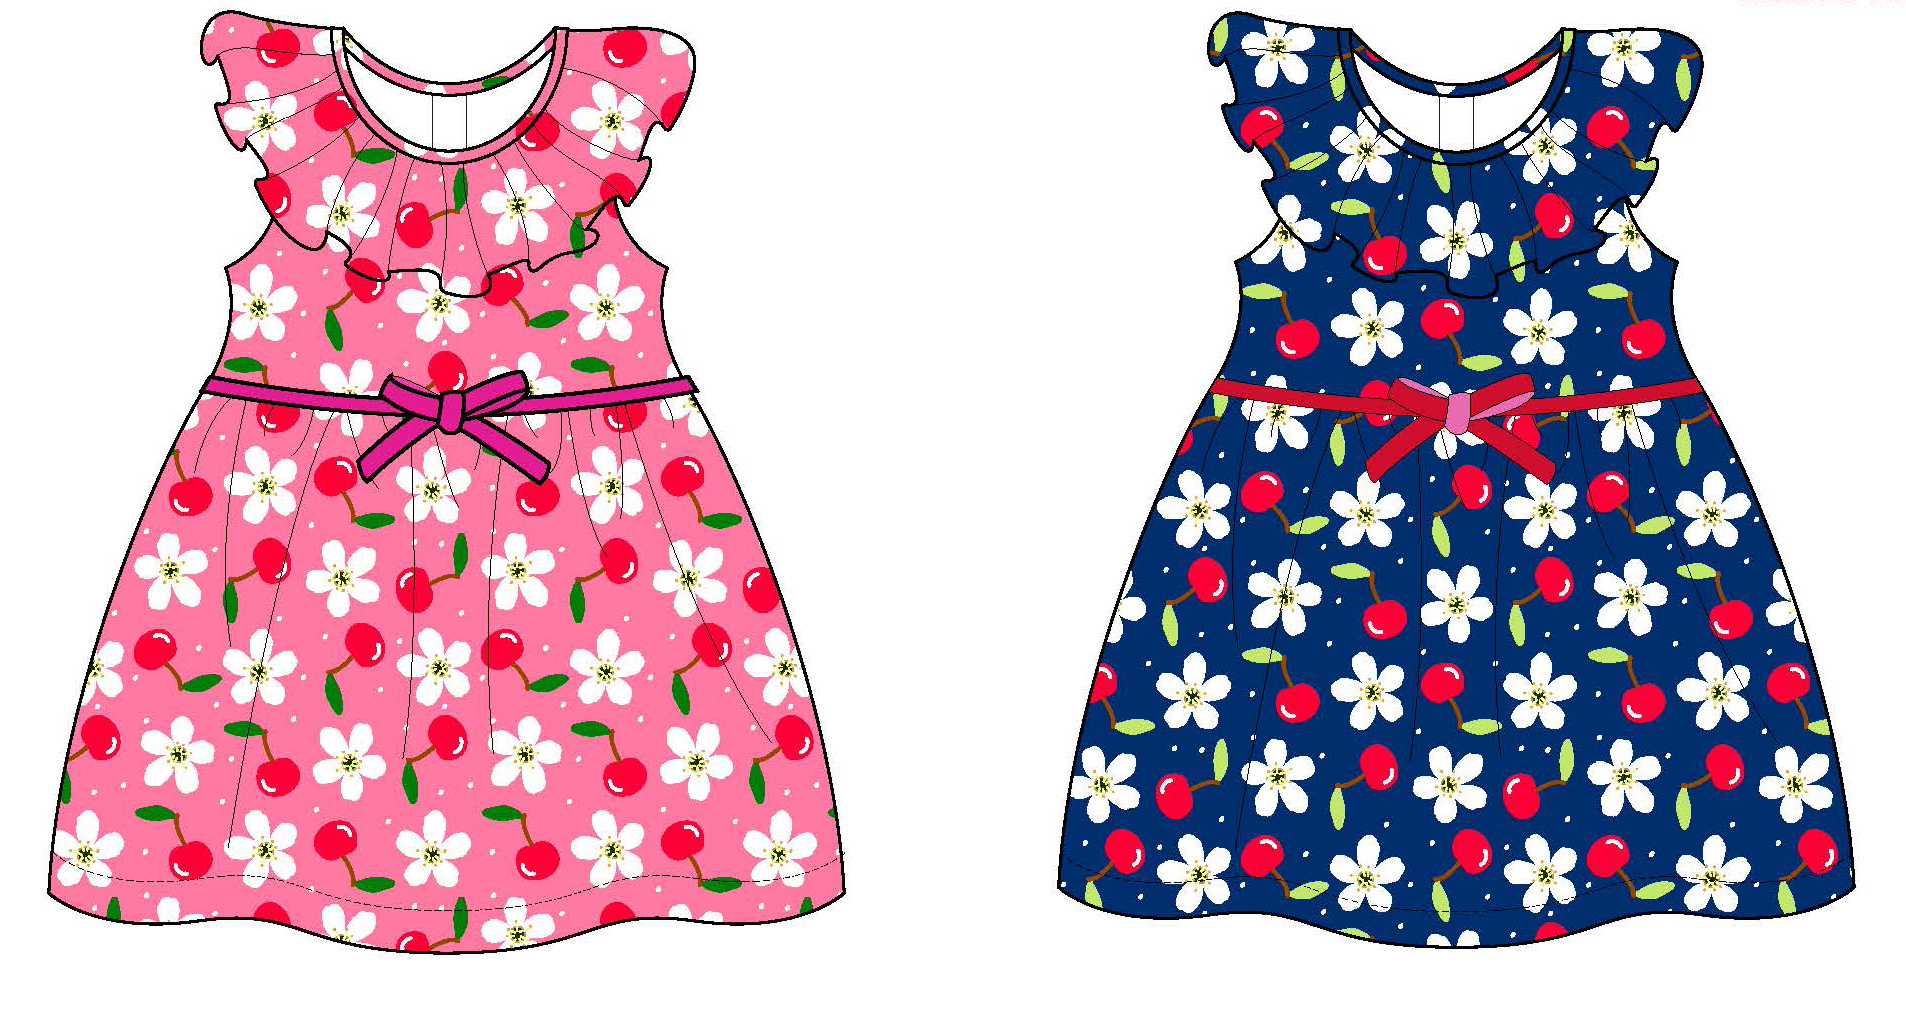 Baby Girl's Knit DRESS w/ Ruffle Top & Ribbon Bow Embellishment - Cherry & Floral Garden Print - Siz